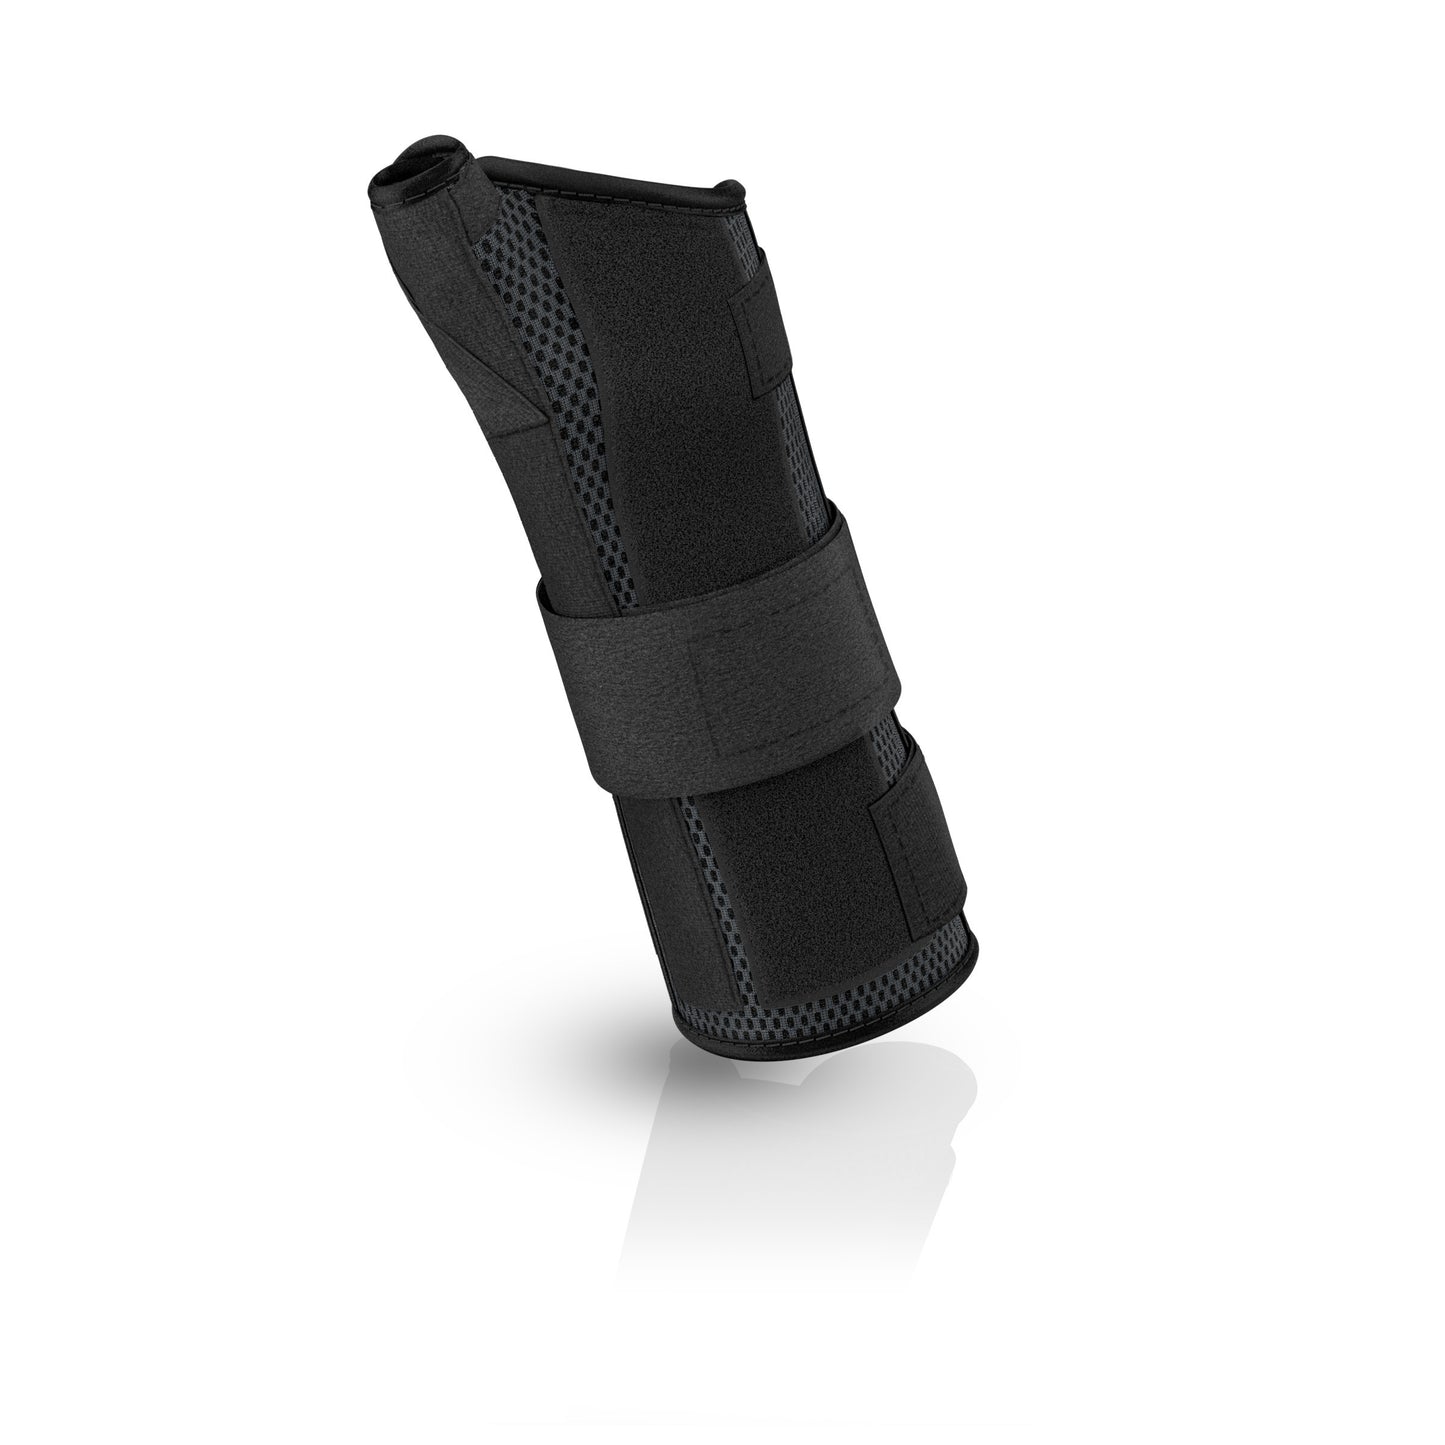 Actimove® Manus Forte Plus Wrist & Thumb Brace